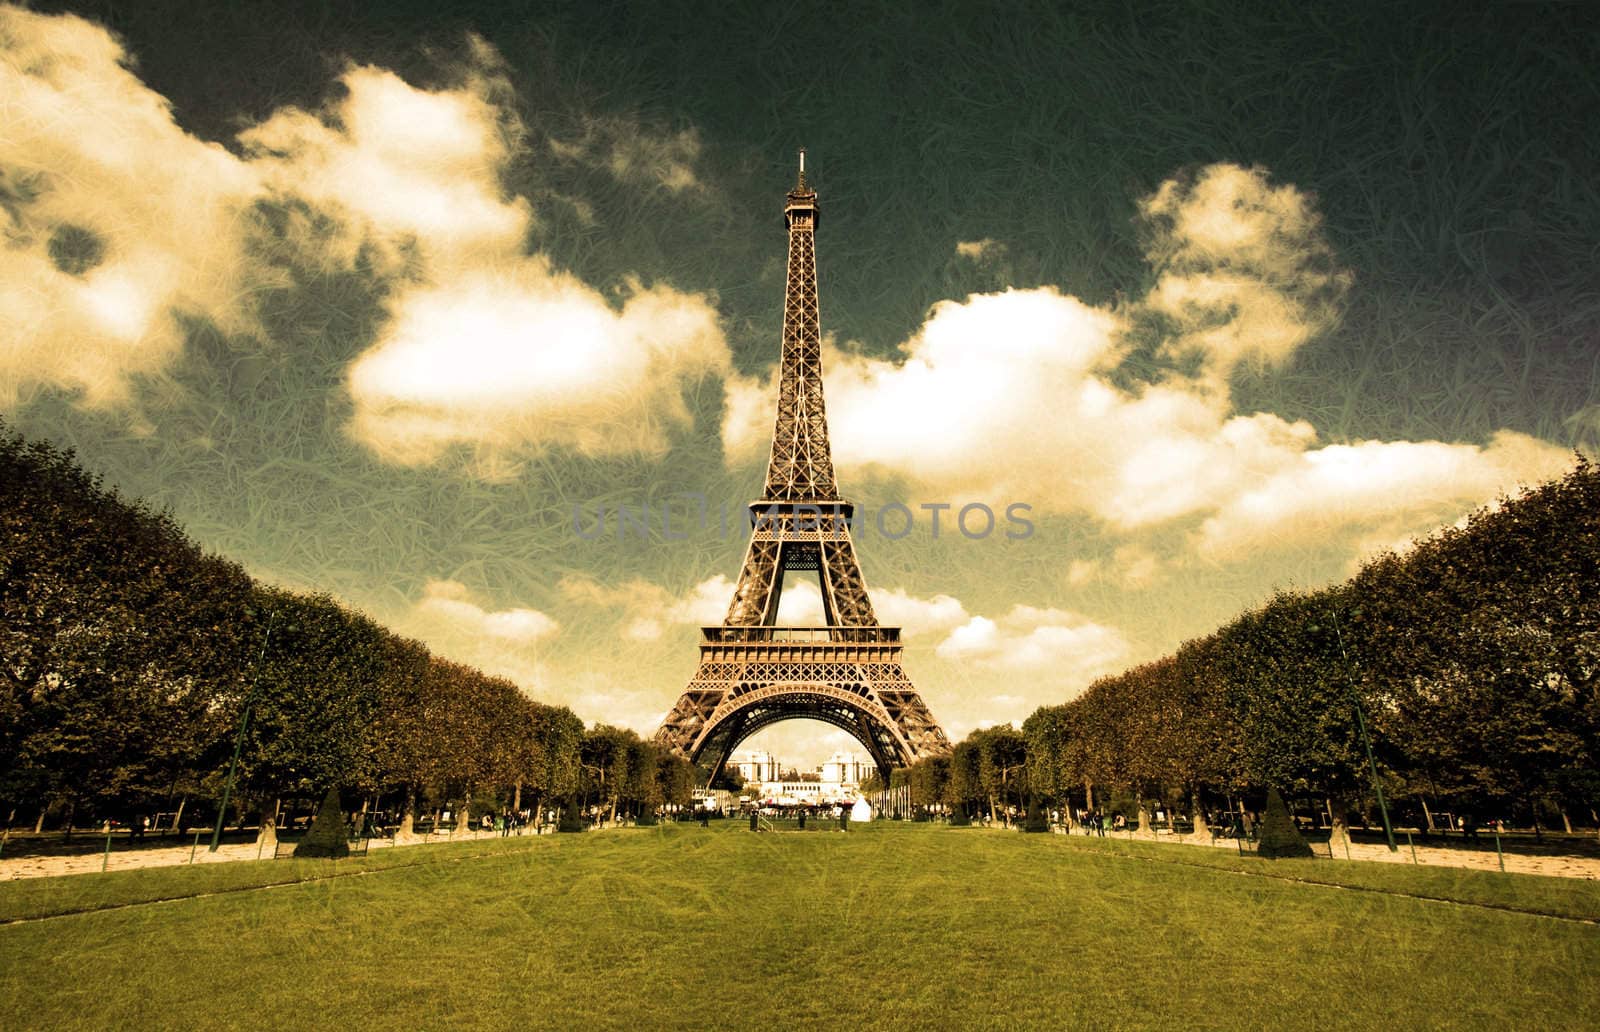 Grungy Eiffel tower postcard by domencolja